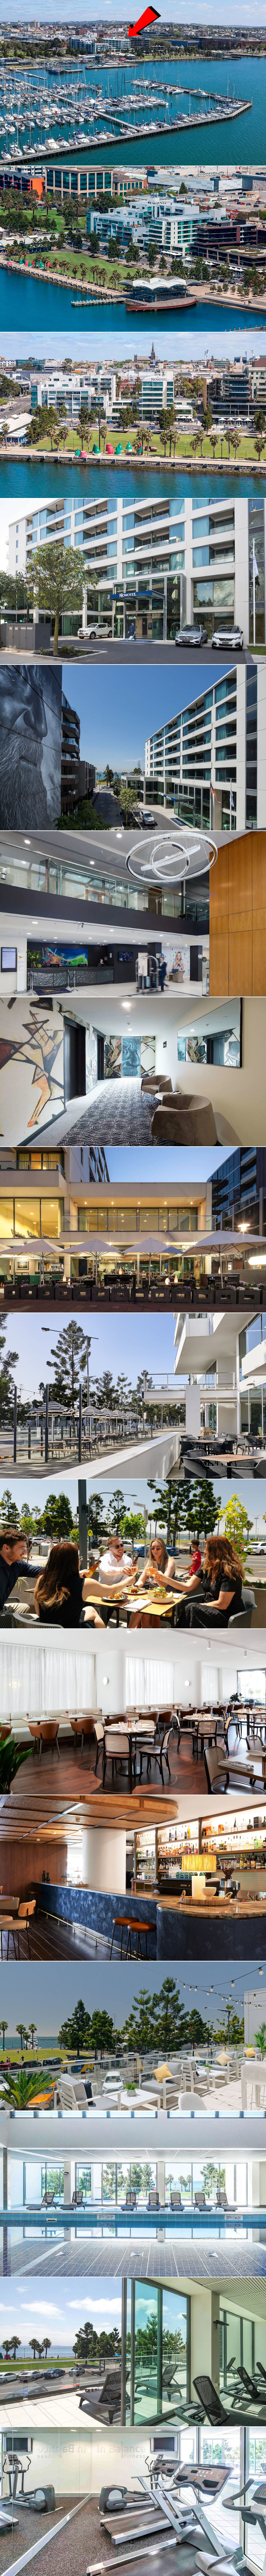 Novotel Geelong - Hotel location and facilities